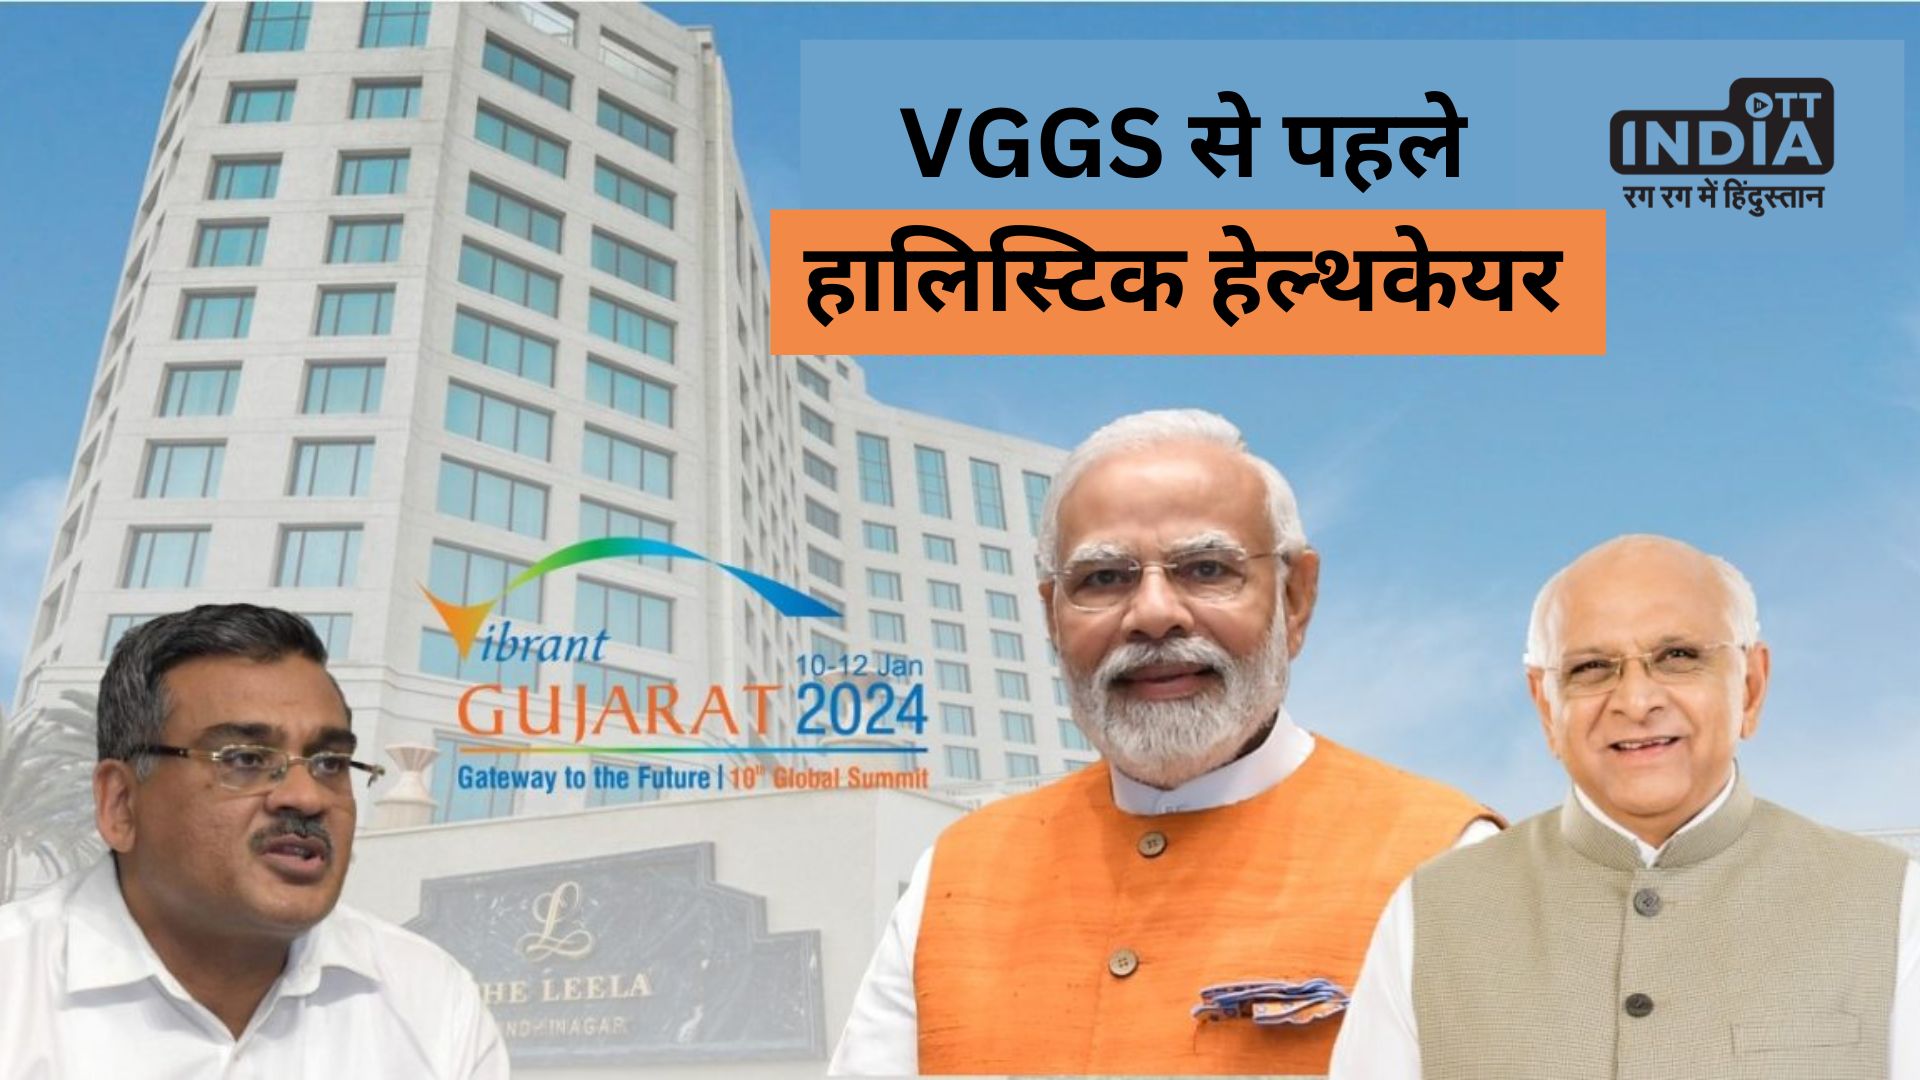 pre summit on holistic health care to be held in Gandhinagar before VGGS 2024